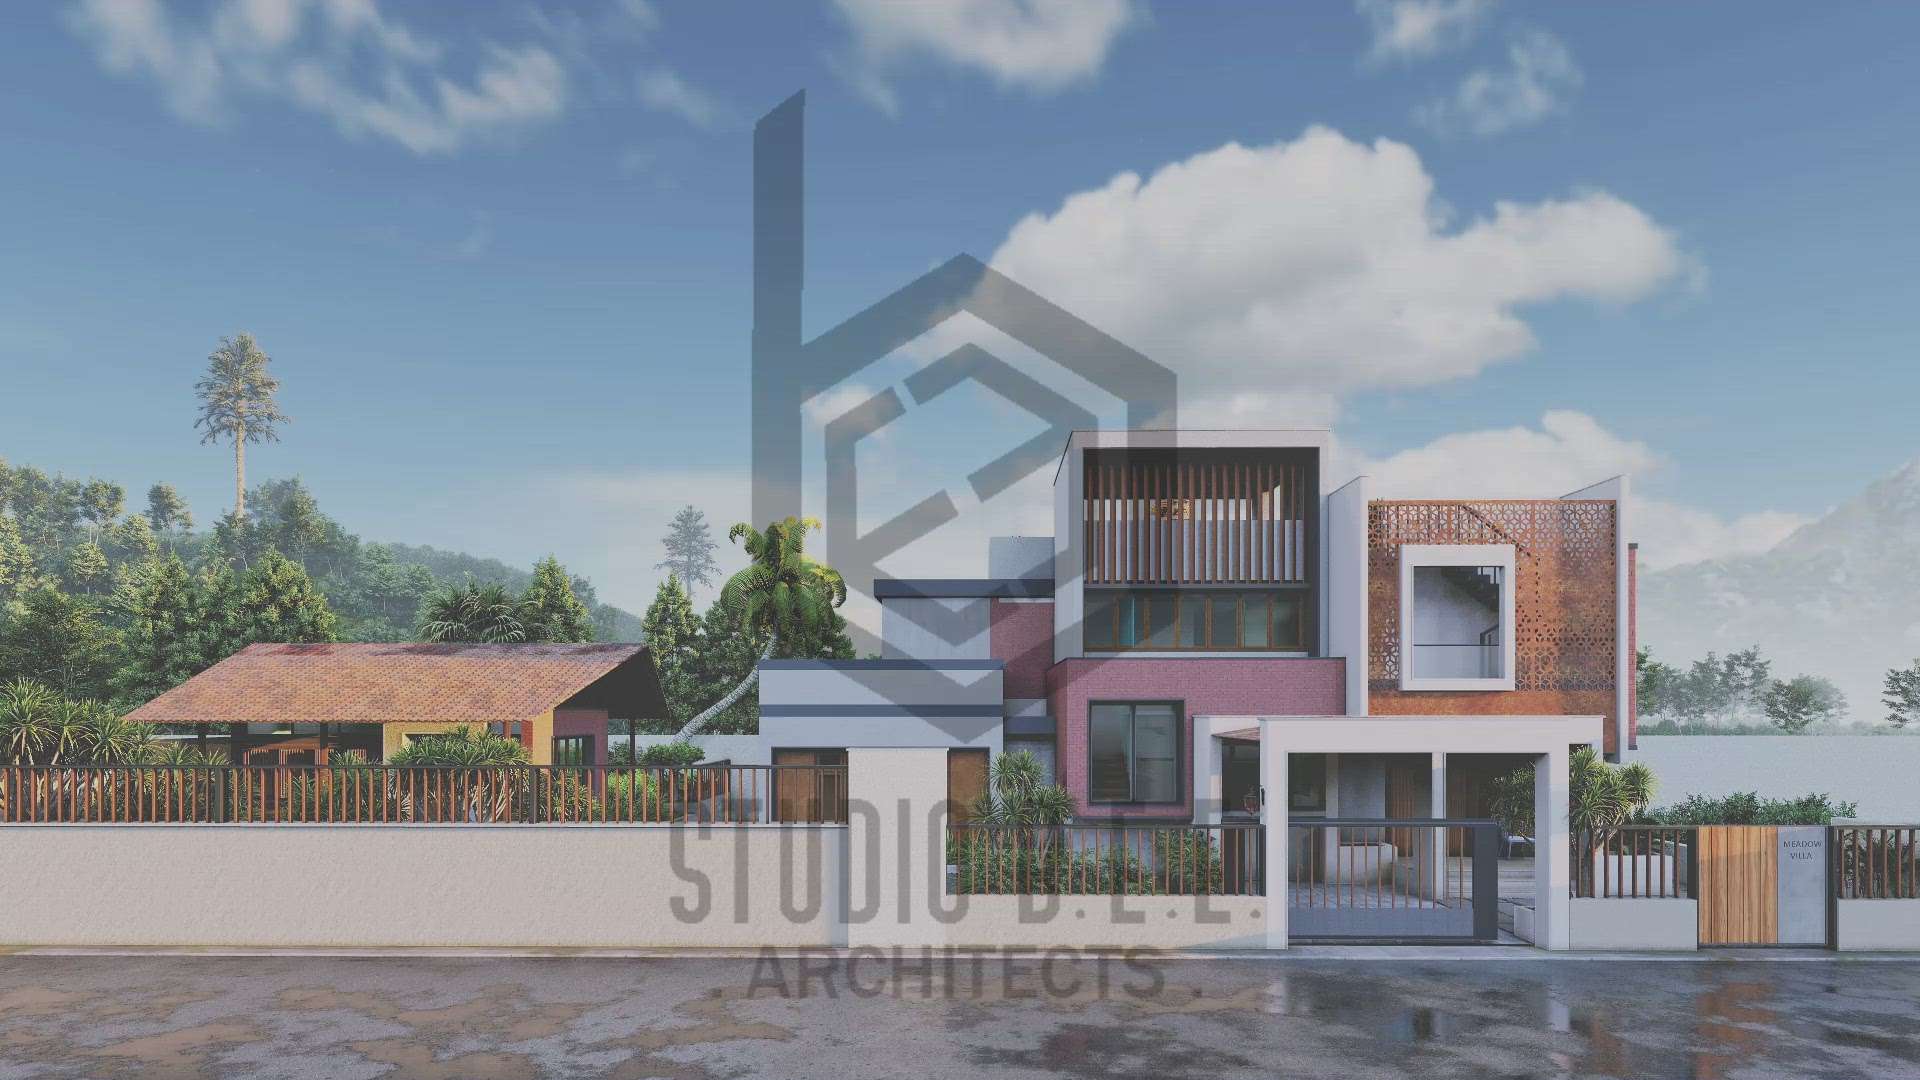 #studio.b.e.e.architects
#3500 sqft
9995533244
#exteriordesigns #3ddesigns #residencial design
#construction